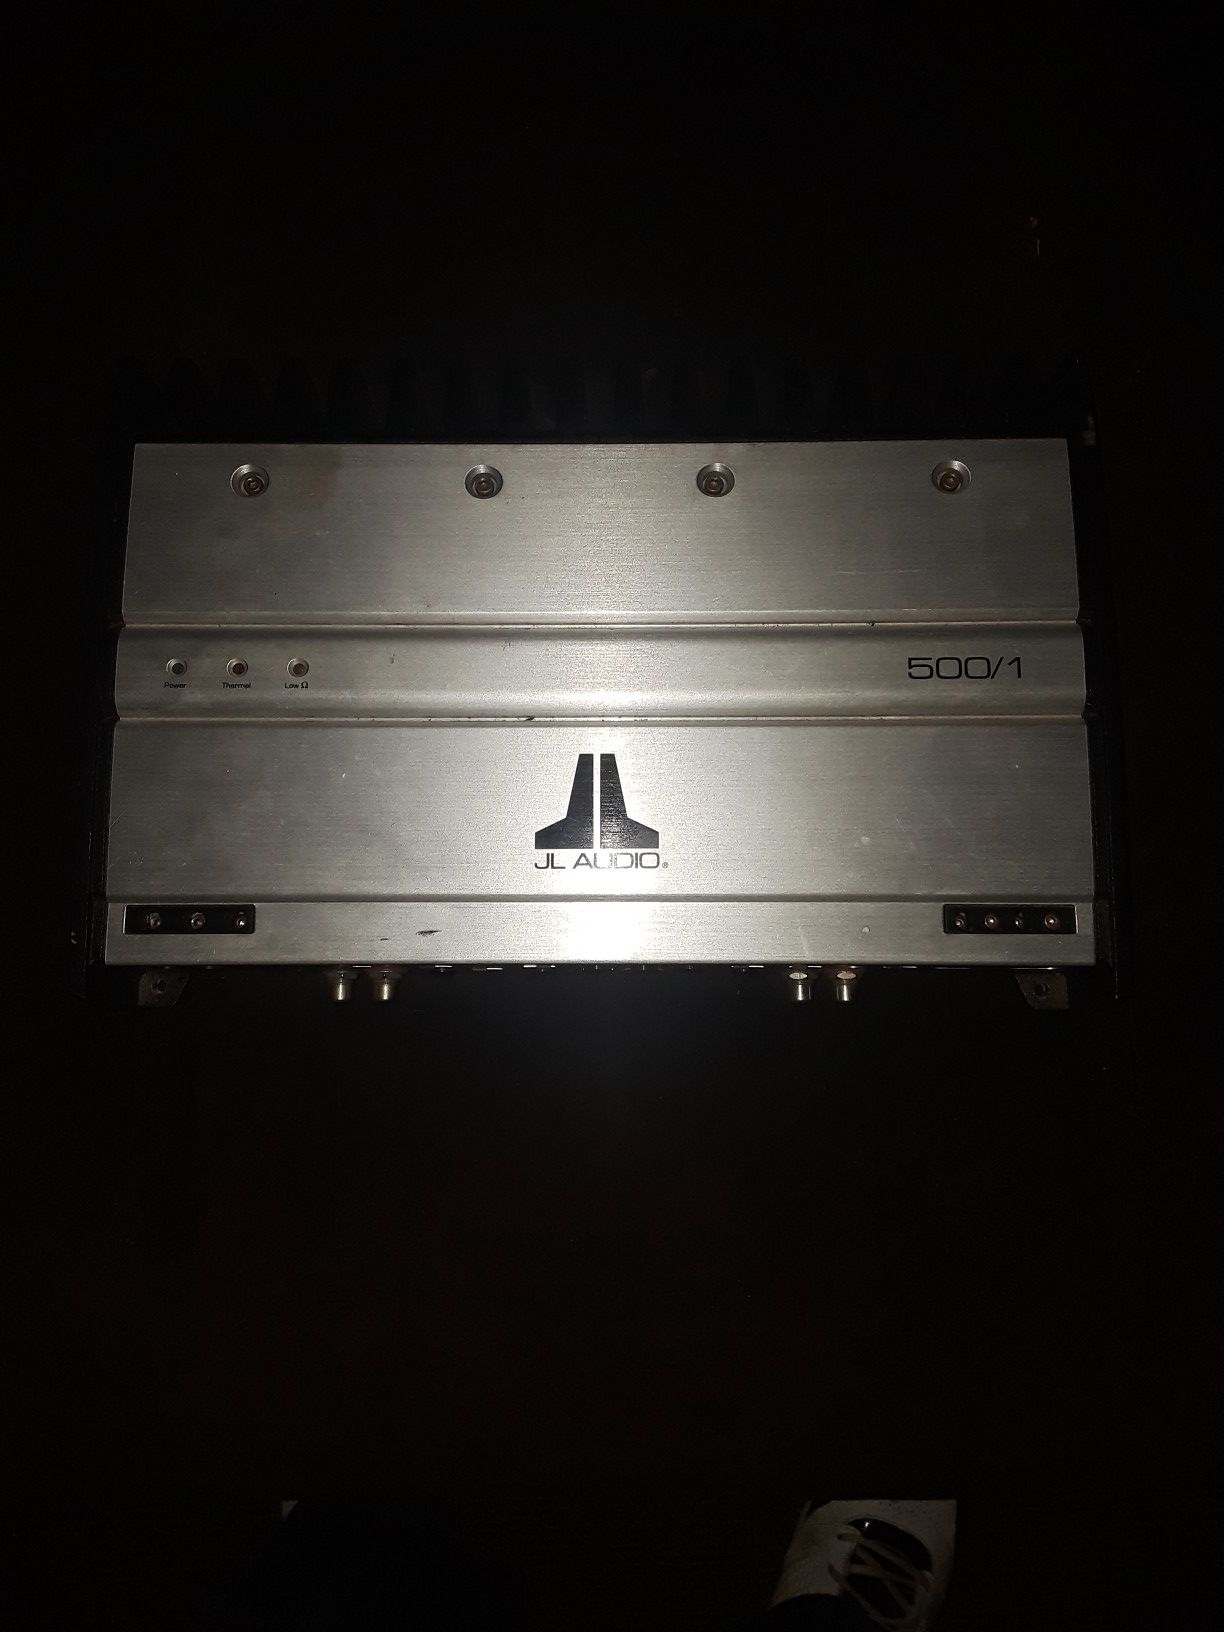 JL Audio amplifier